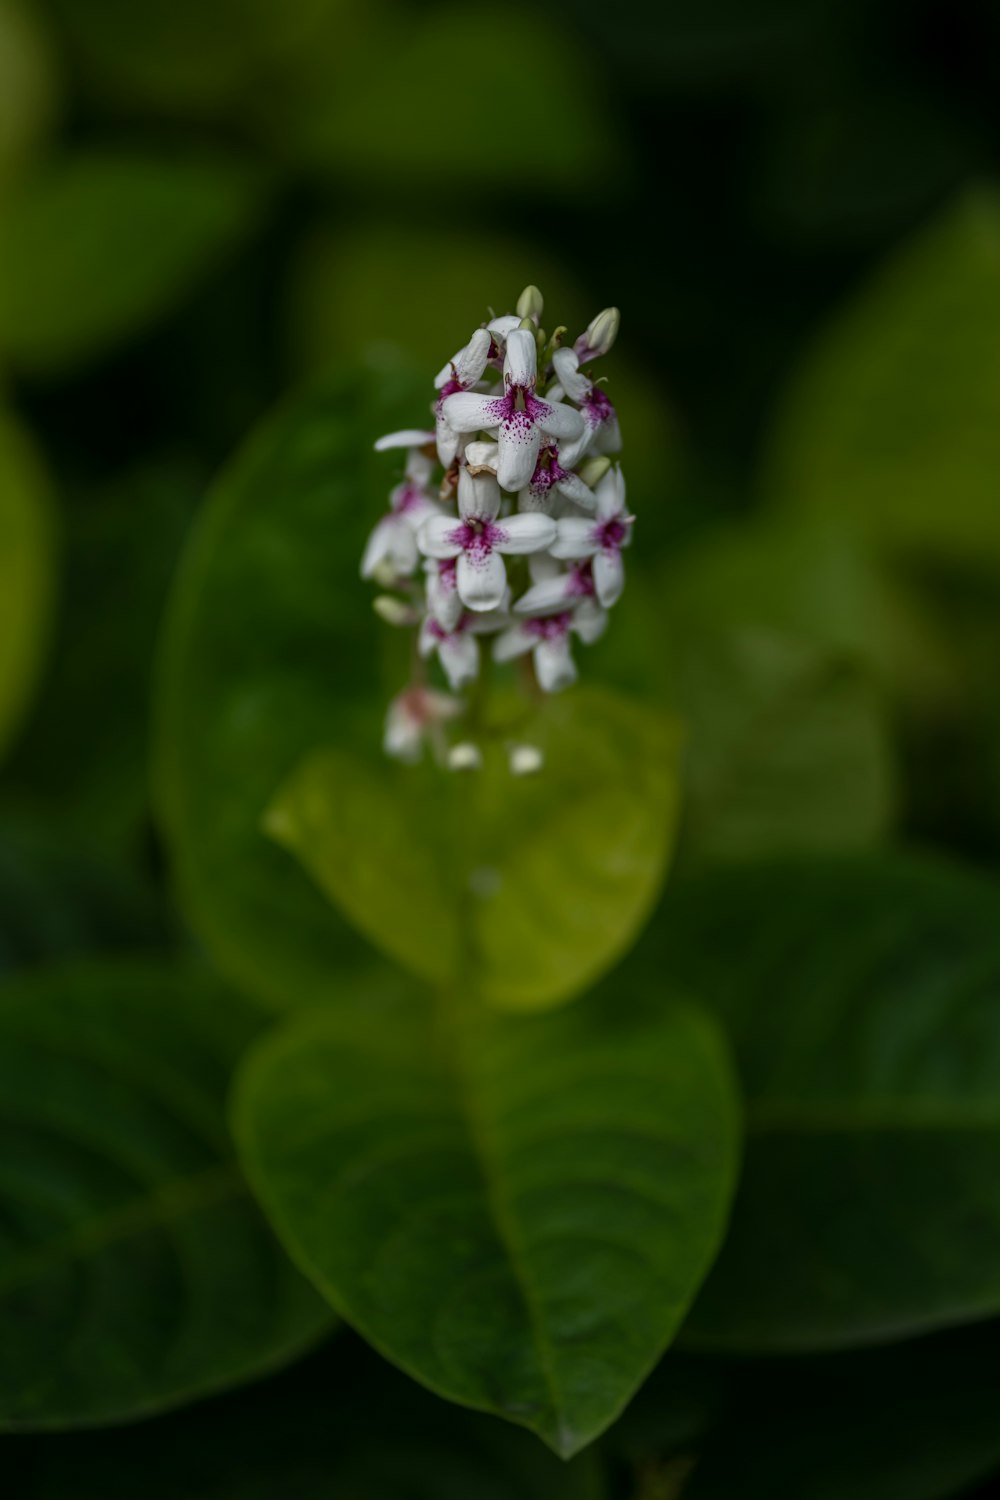 white and purple flower in macro shot